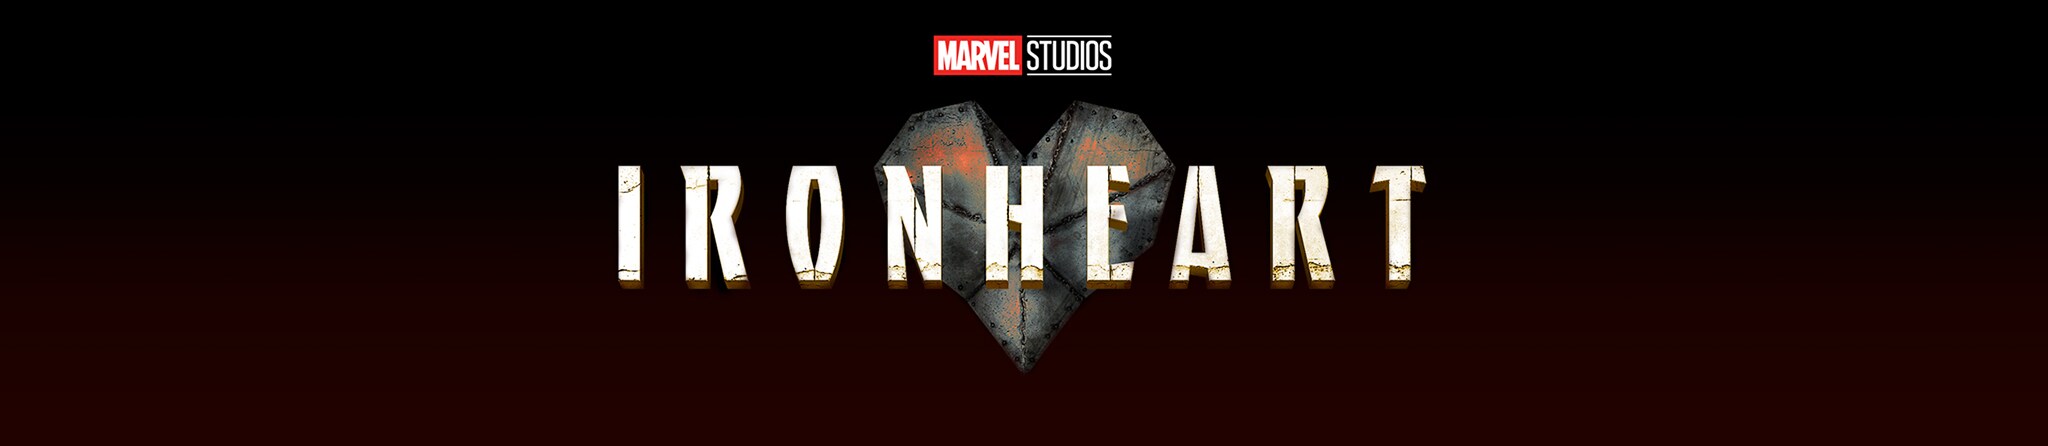 Marvel Studios | Ironheart